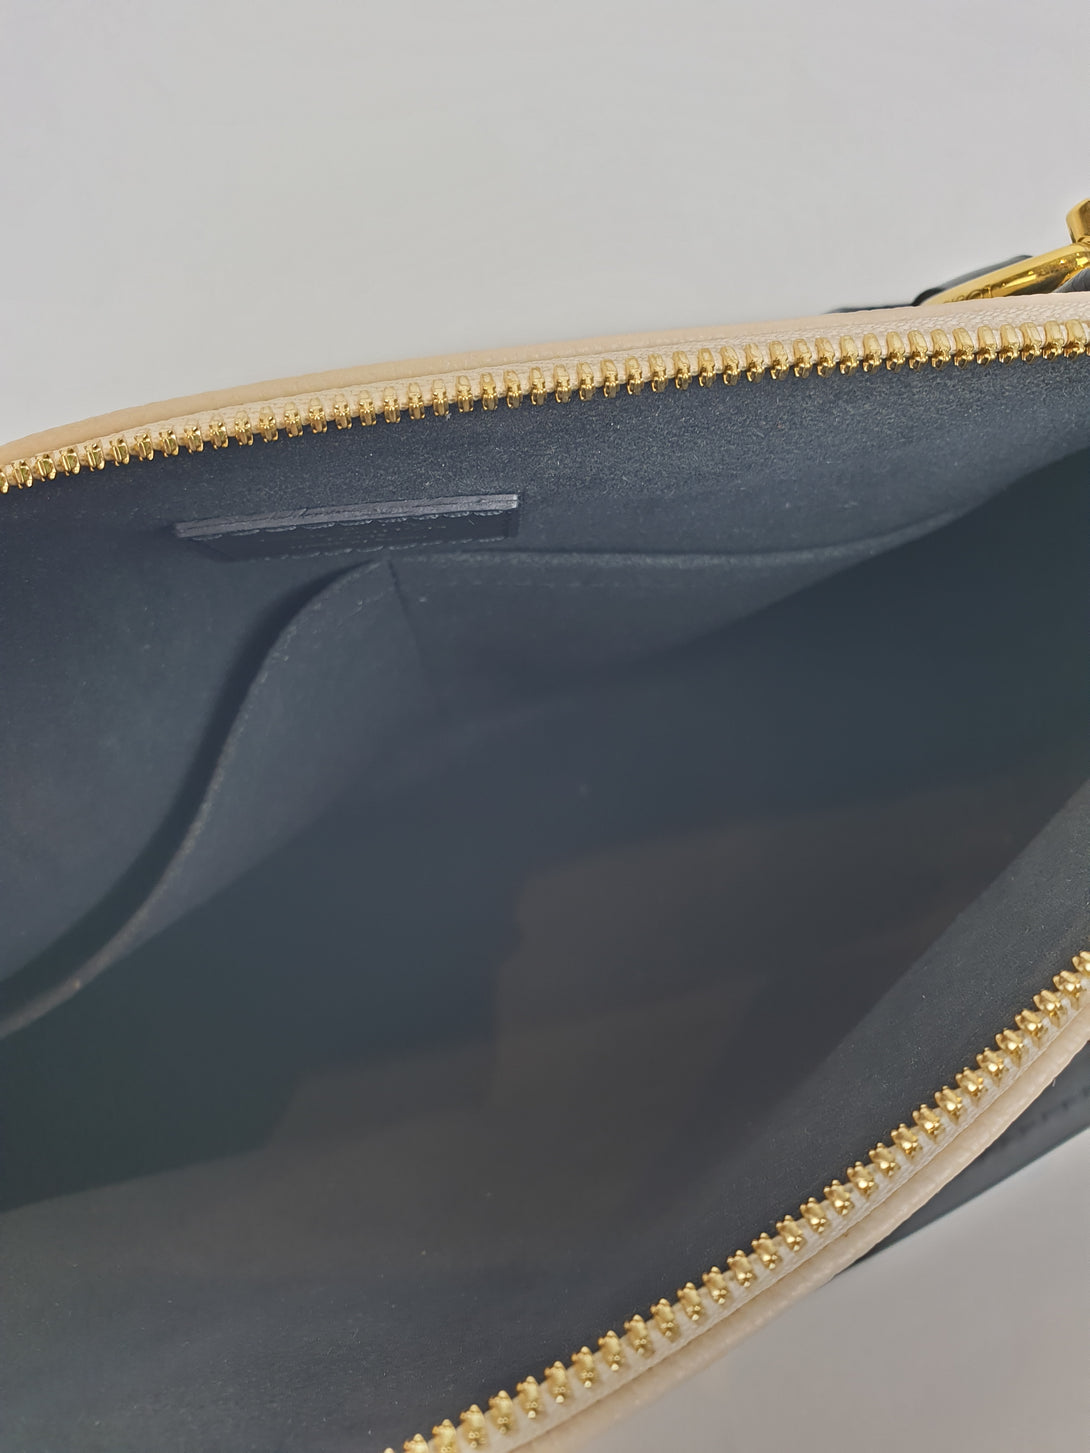 Louis Vuitton Cream and Black Leather "Sac V" BB Crossbody Tote - Siopaella Designer Exchange